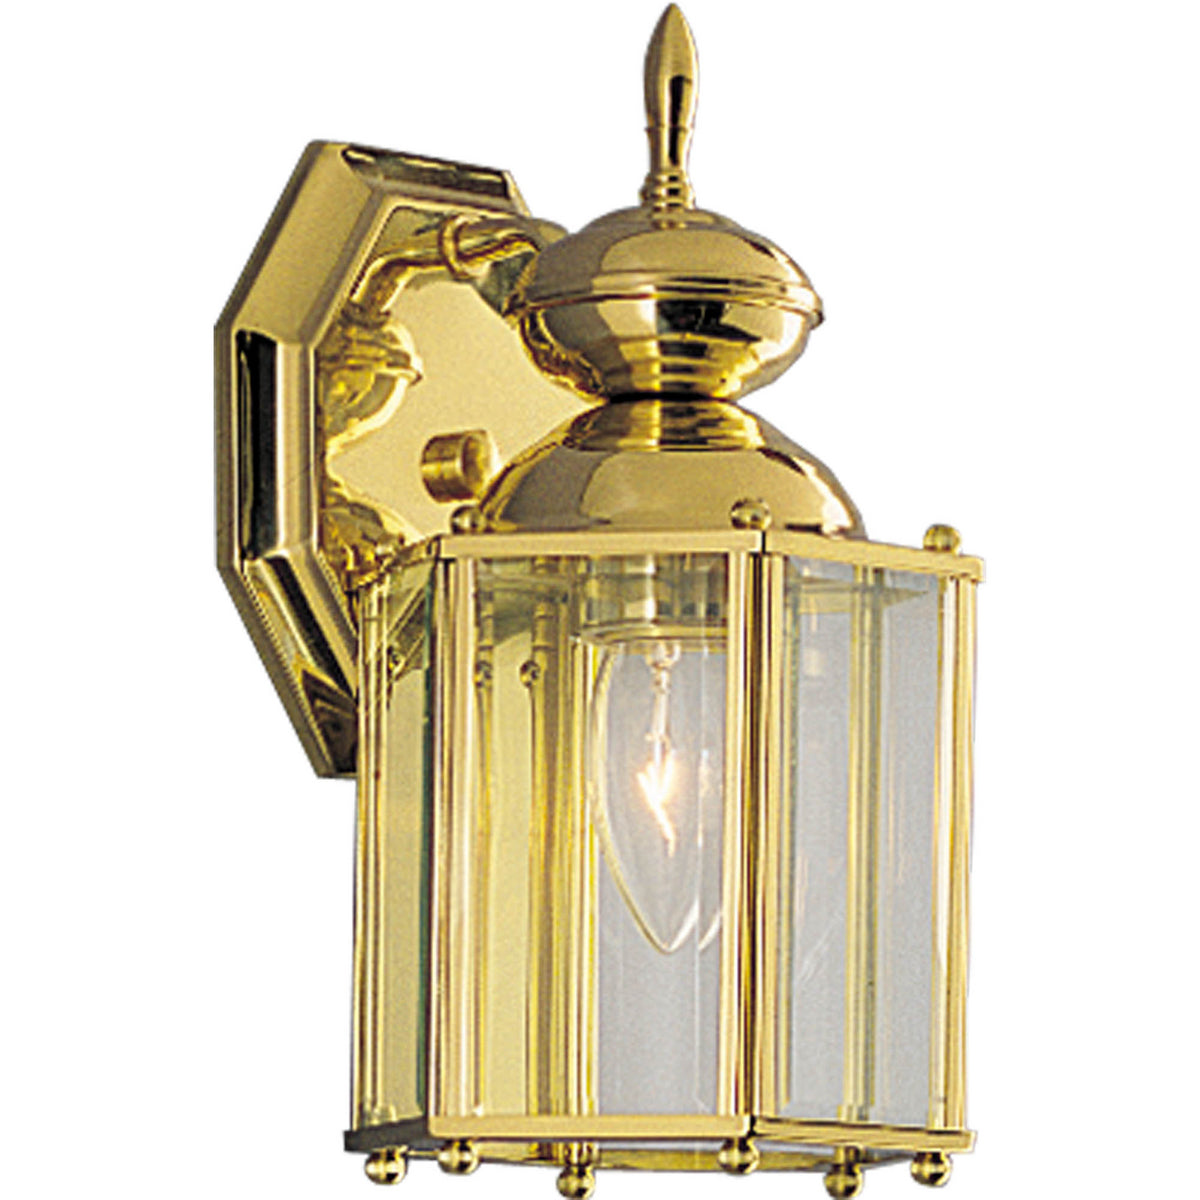 Brassguard Lantern Outdoor Wall Light